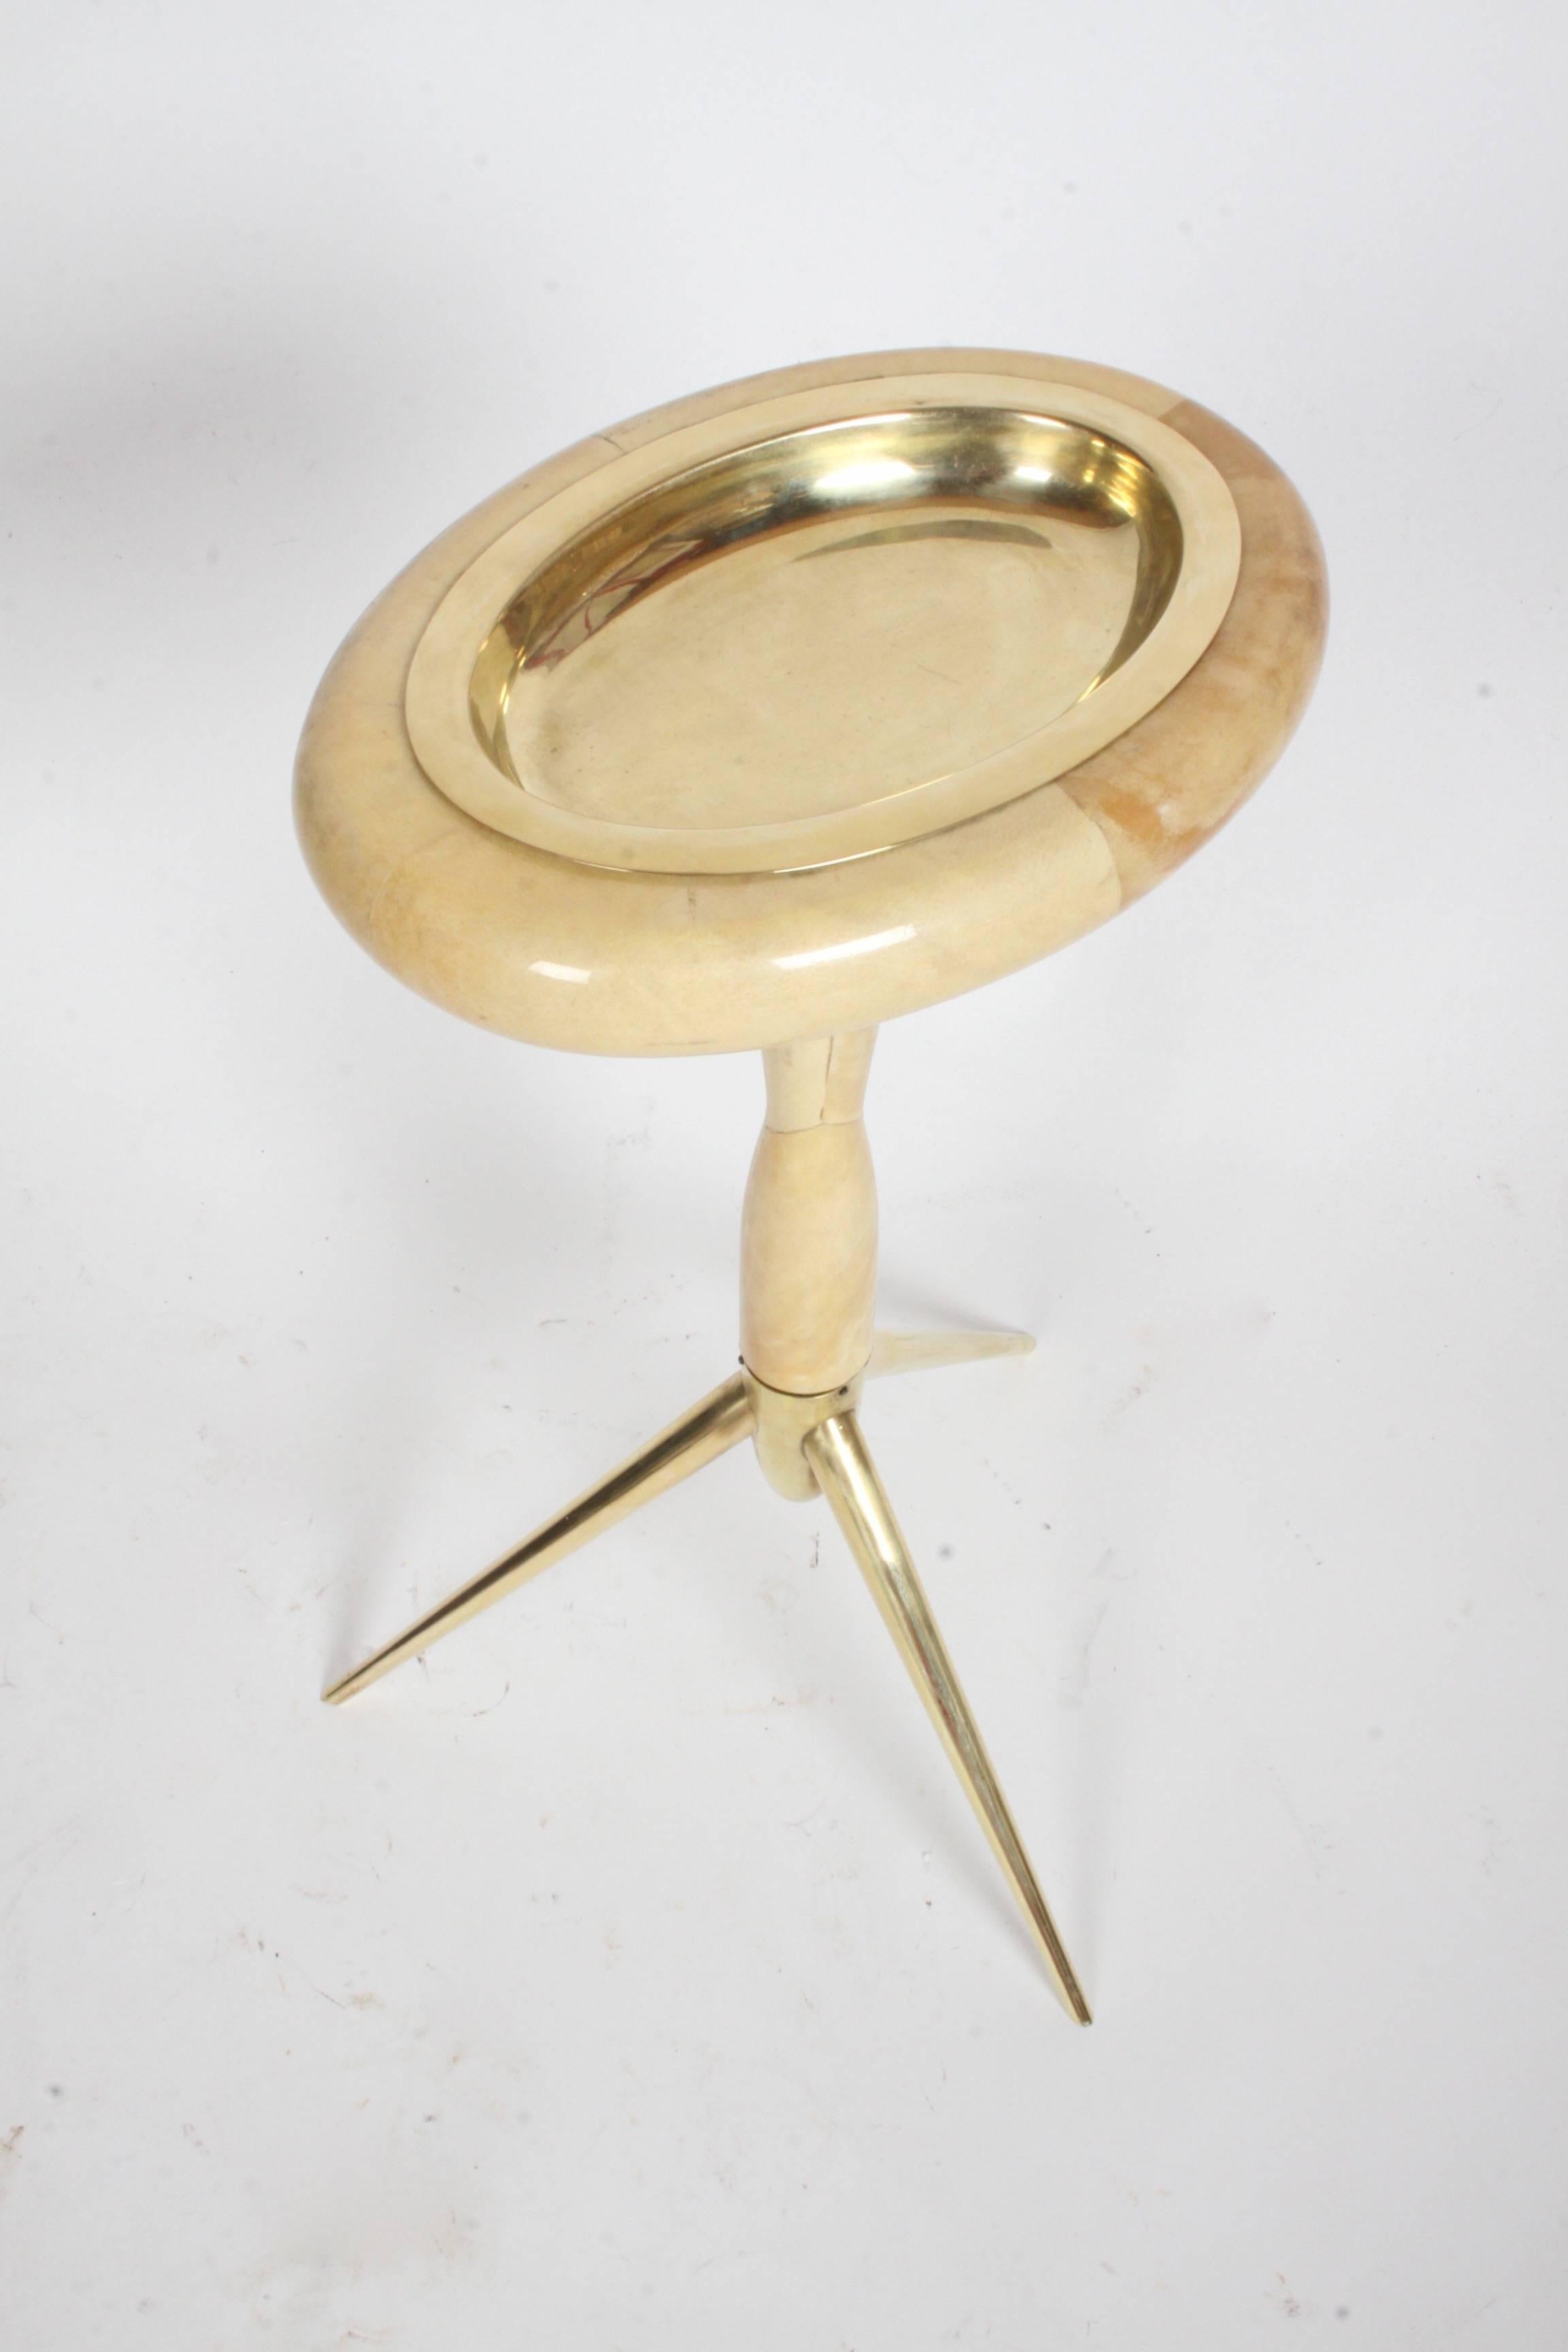 Polished Aldo Tura Italy Goatskin Parchment Side Table with Brass Tripod Legs